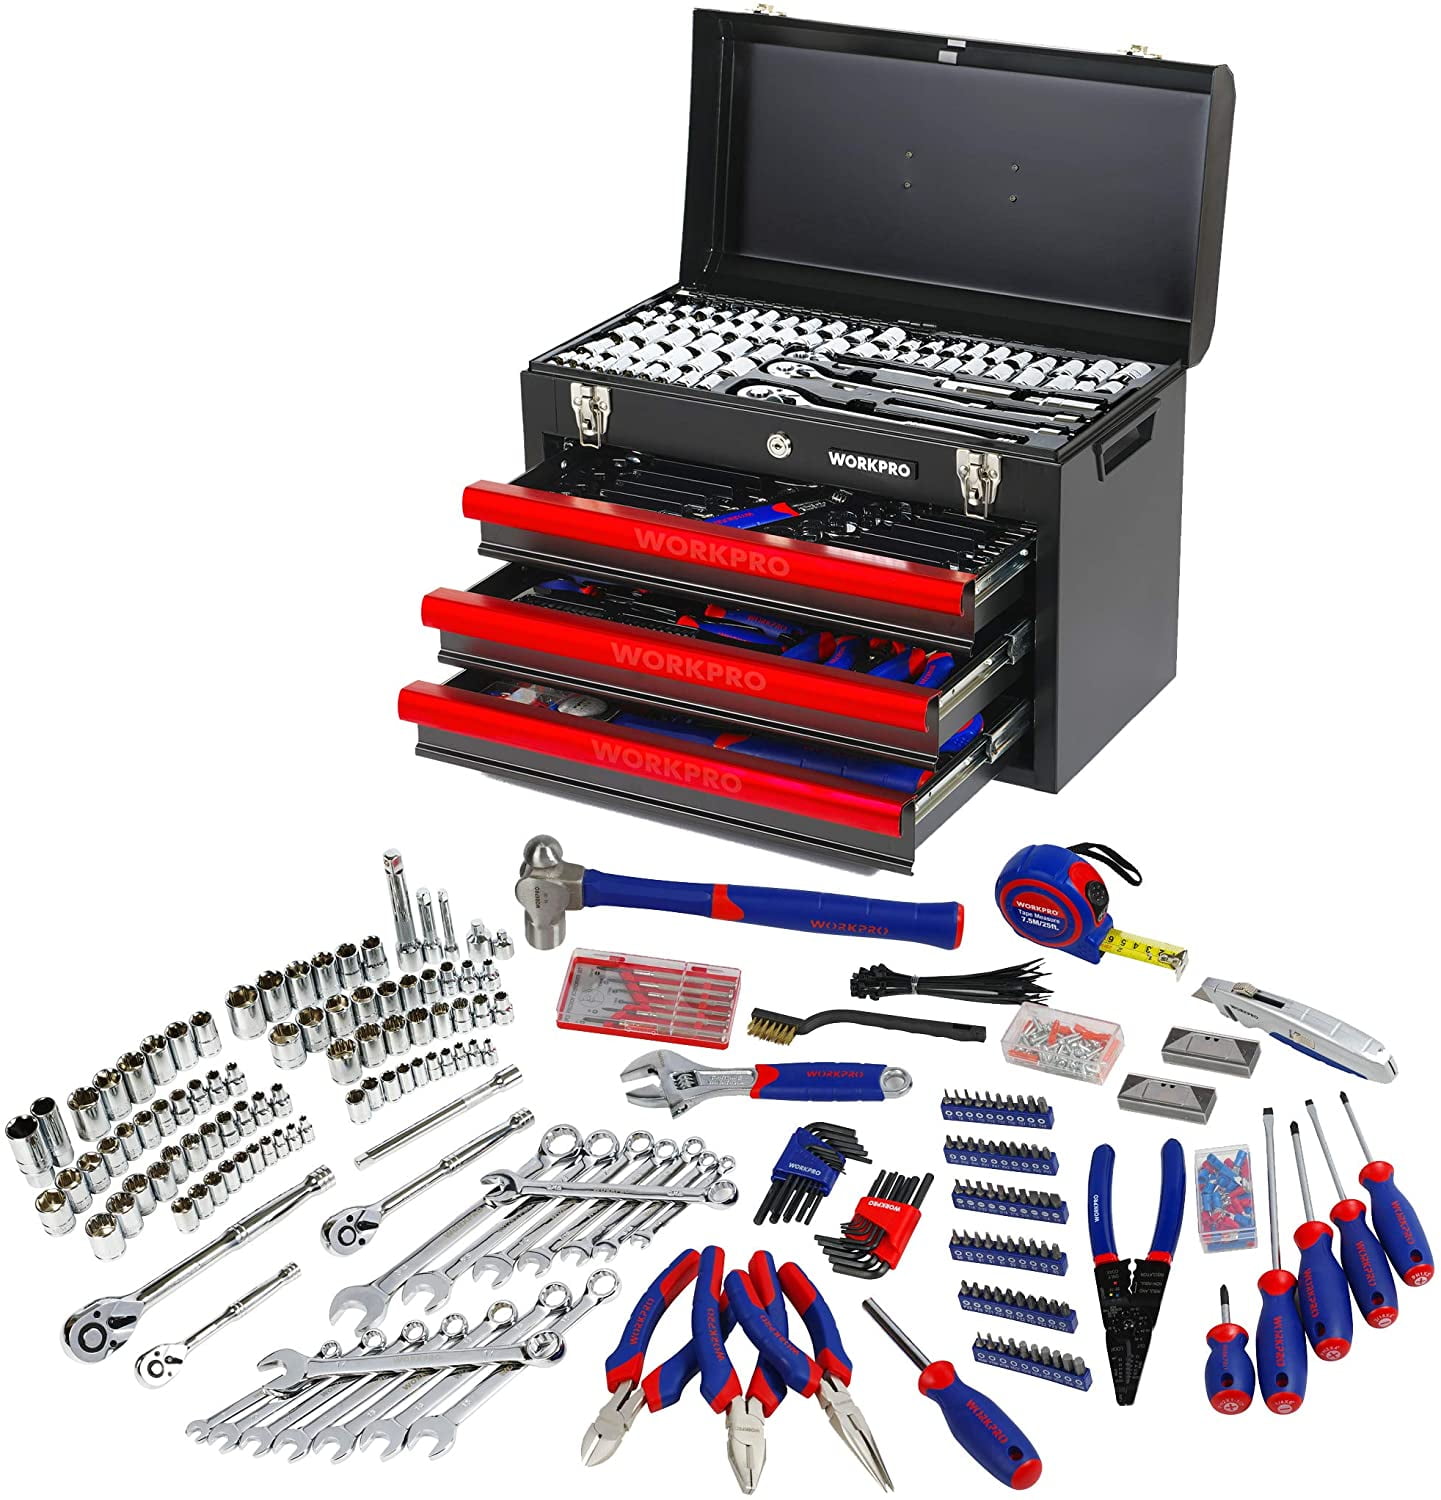 Craftsman 320 Piece Mechanic's Tool Set With 3 Drawer Case Box #311 254 230 